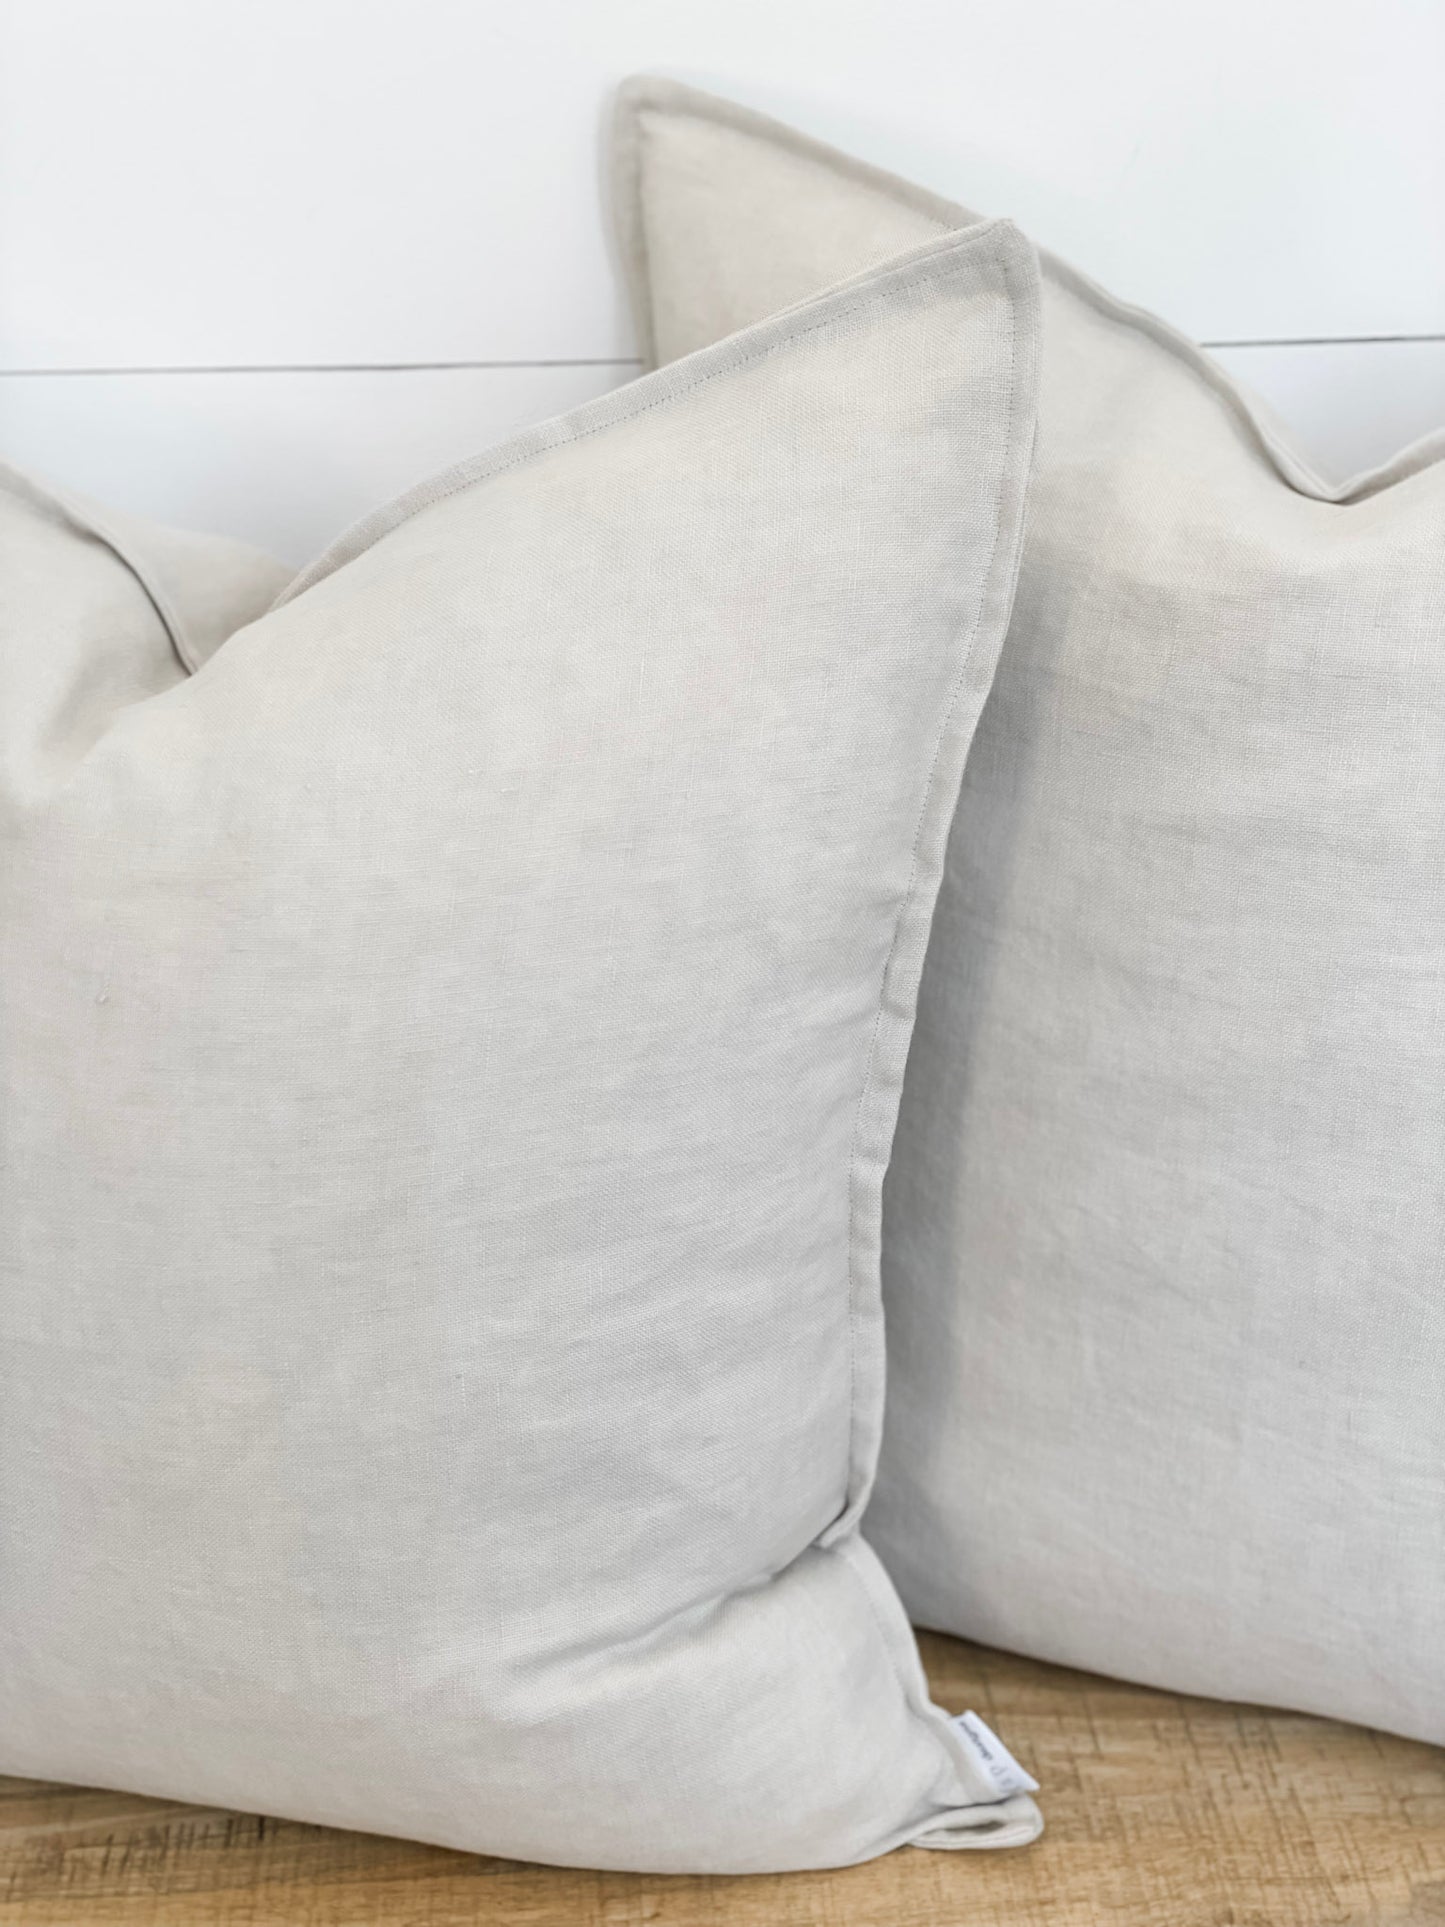 Cushion Cover - Alabaster European Linen